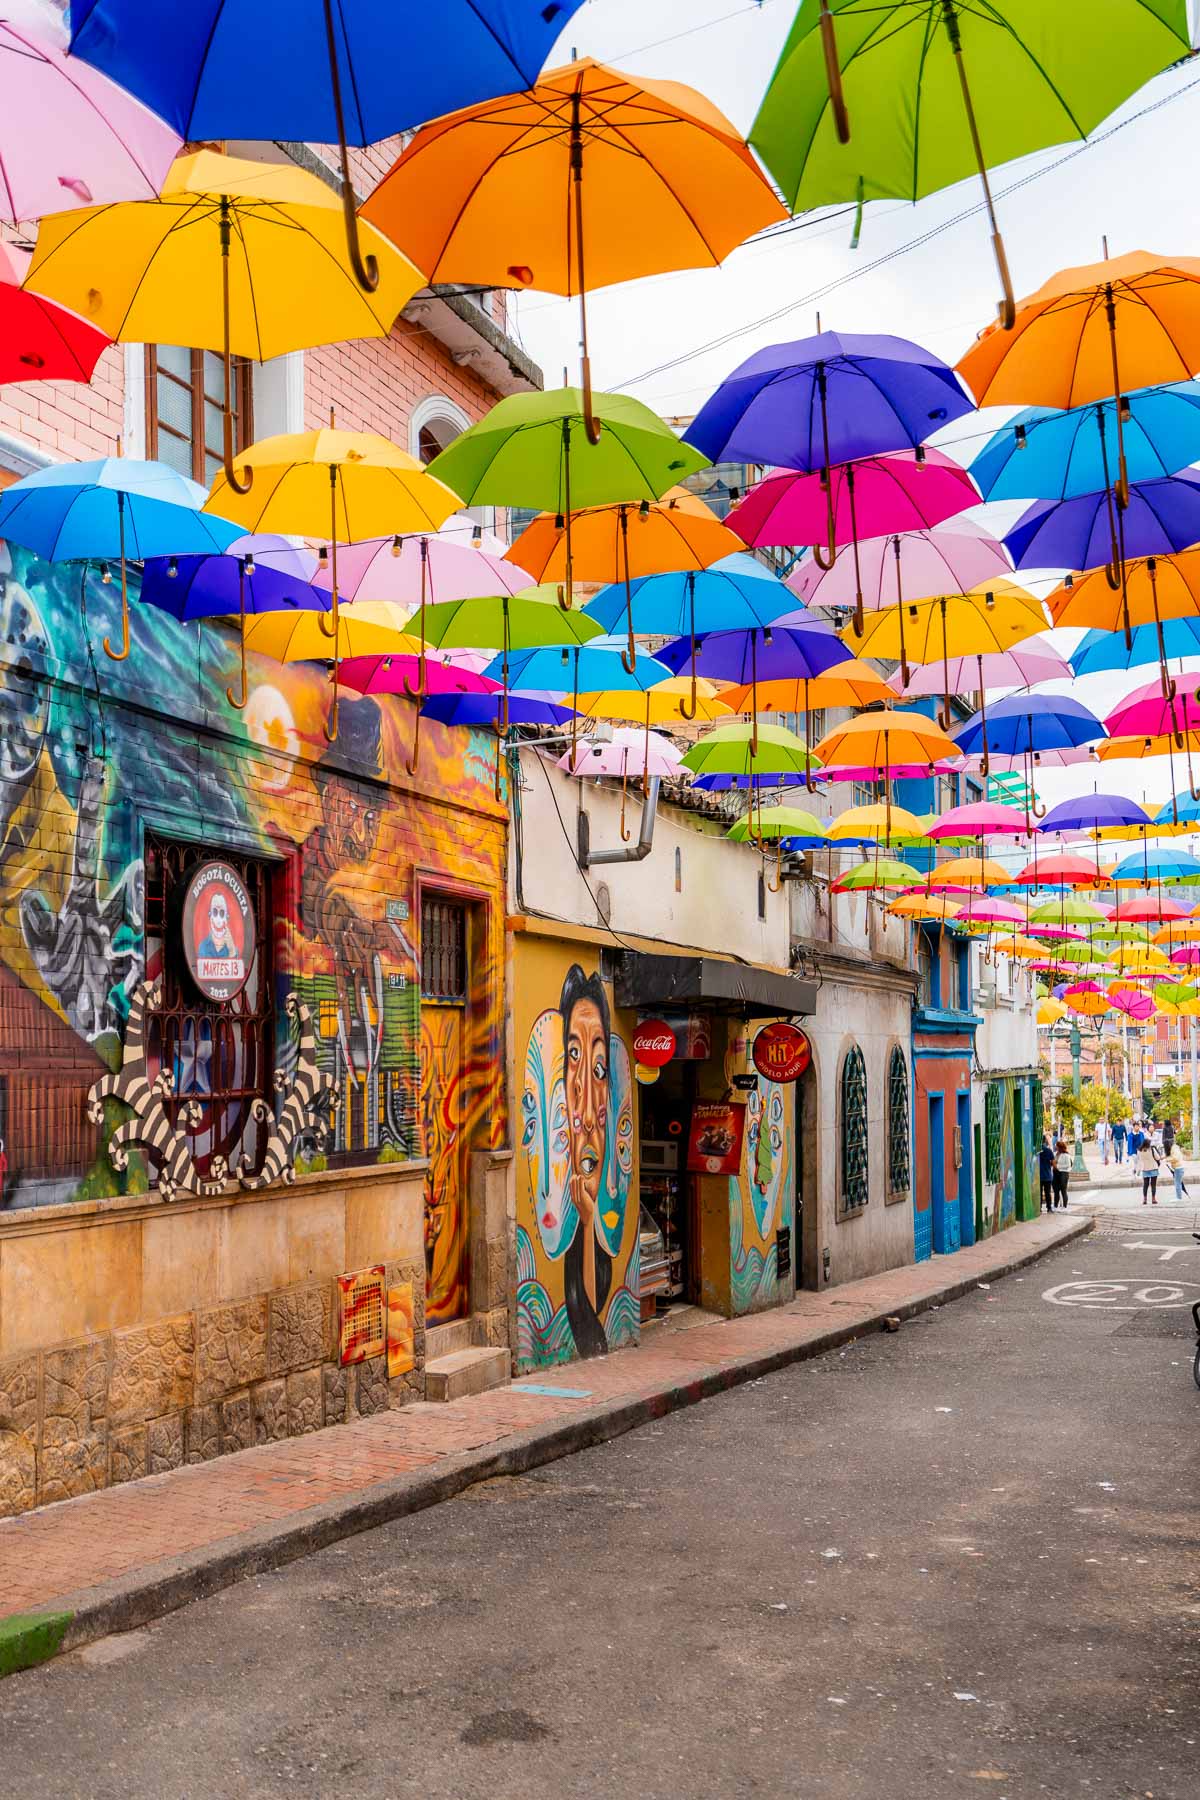 Street art and colorful umbrellas in Bogota